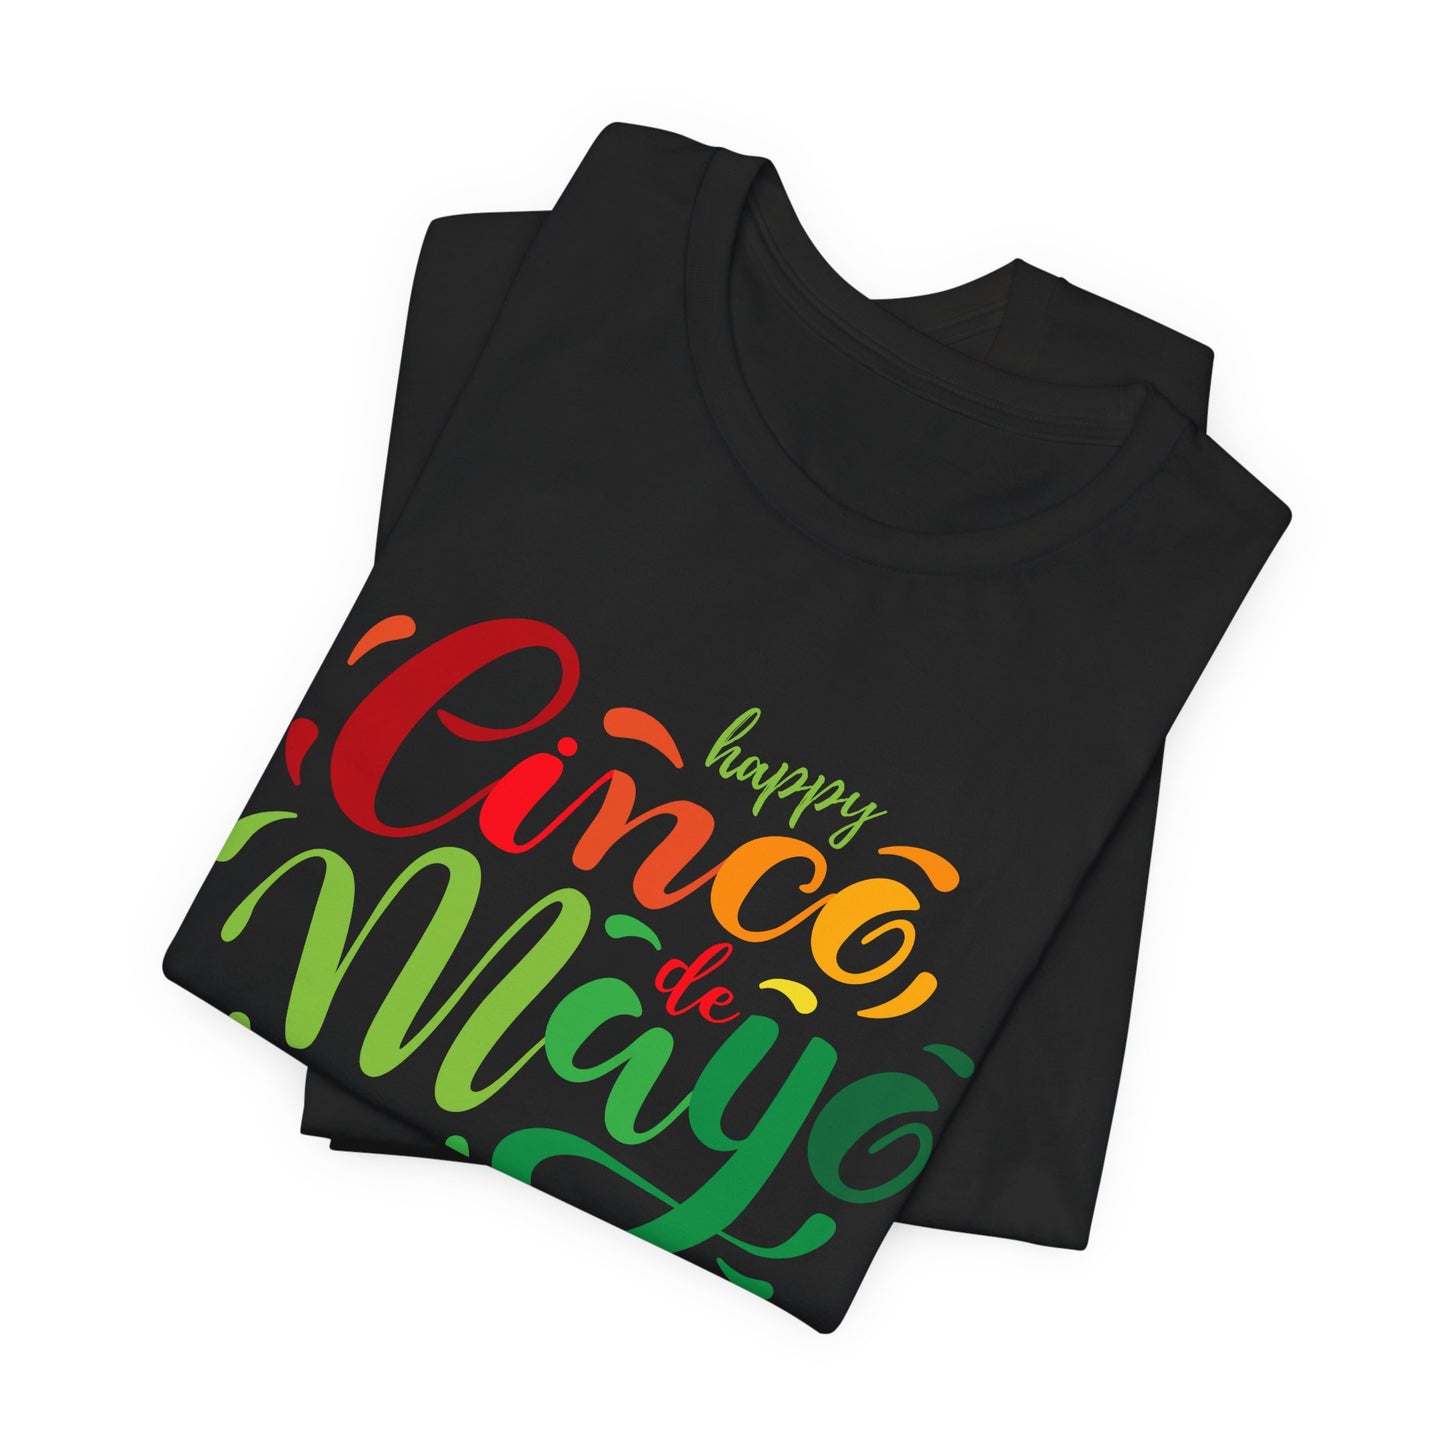 Fiesta T-Shirt For Cinco de Mayo T Shirt For Mexico Holiday TShirt